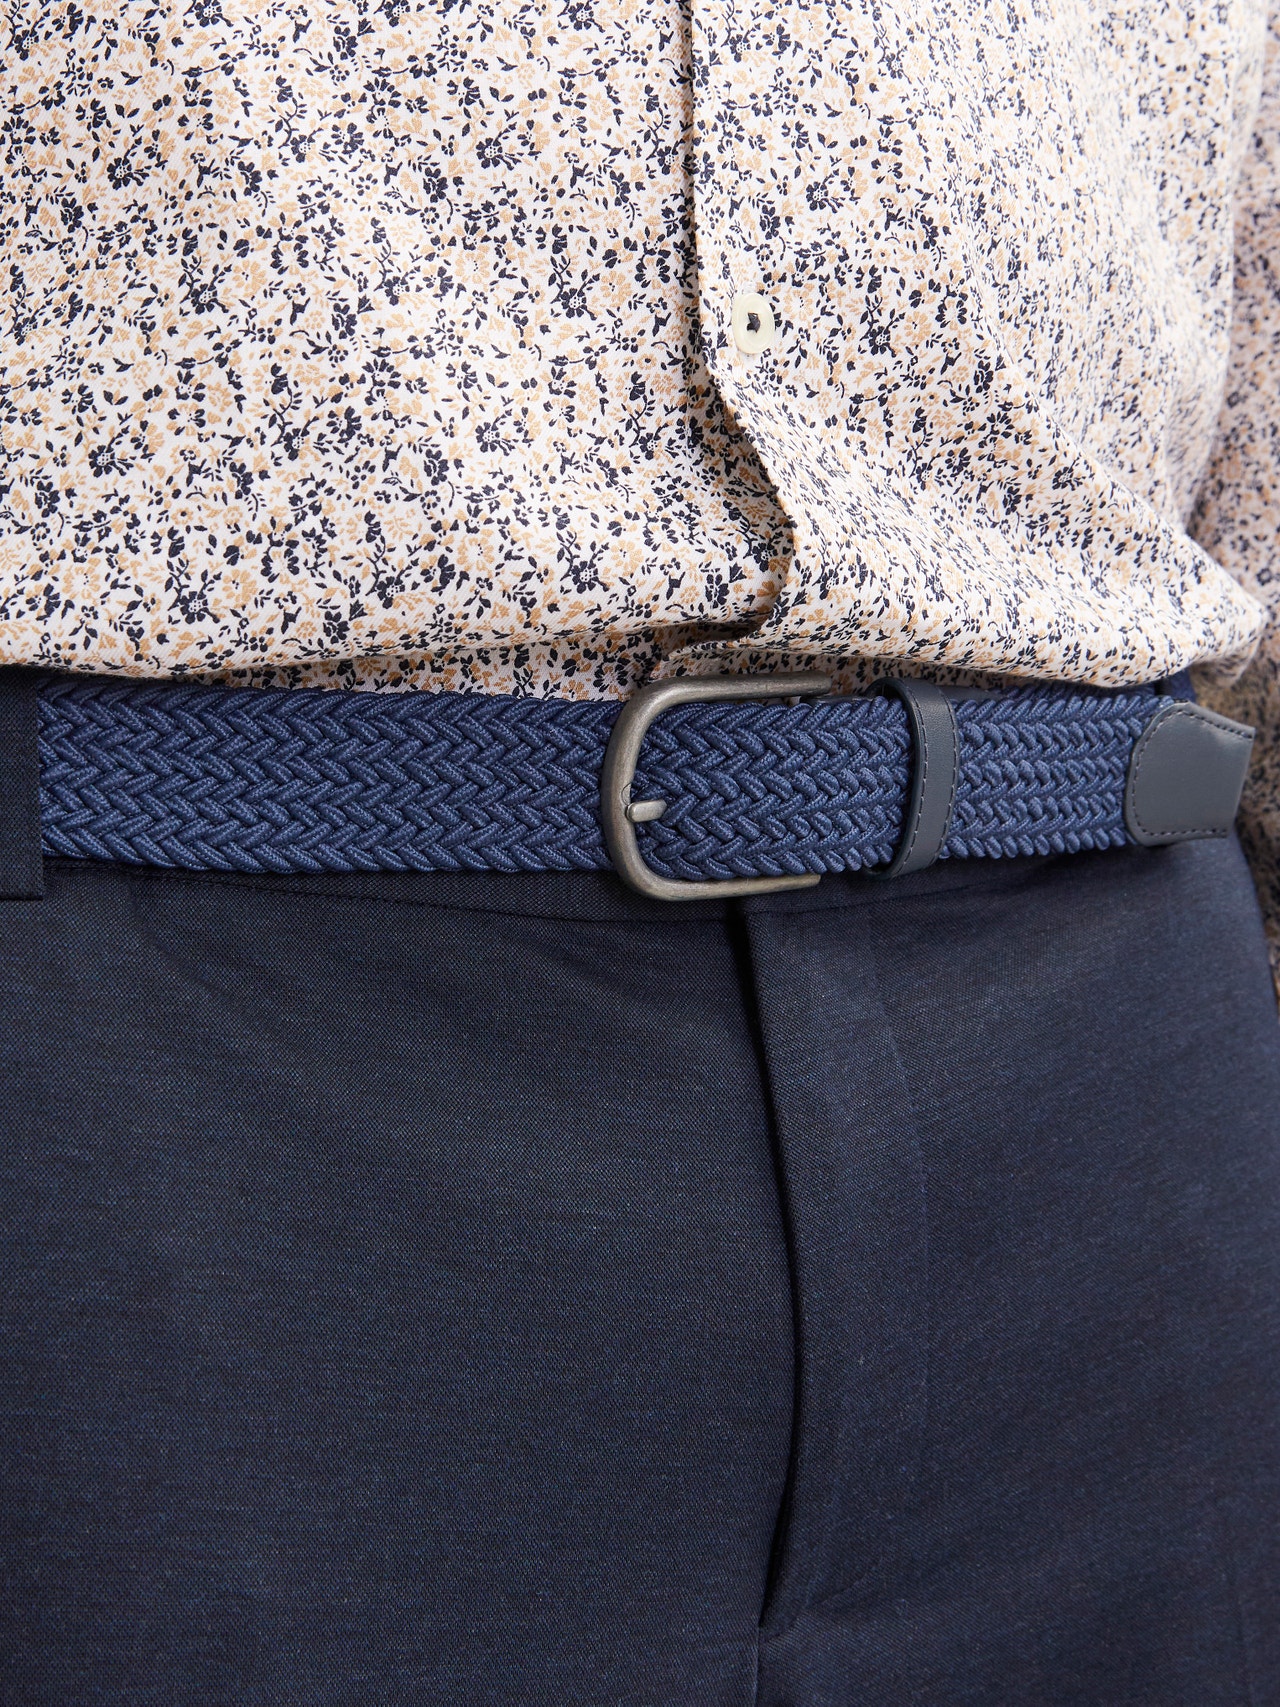 Jack & Jones Plus Size Cinturón Polyester -Ensign Blue - 12255013